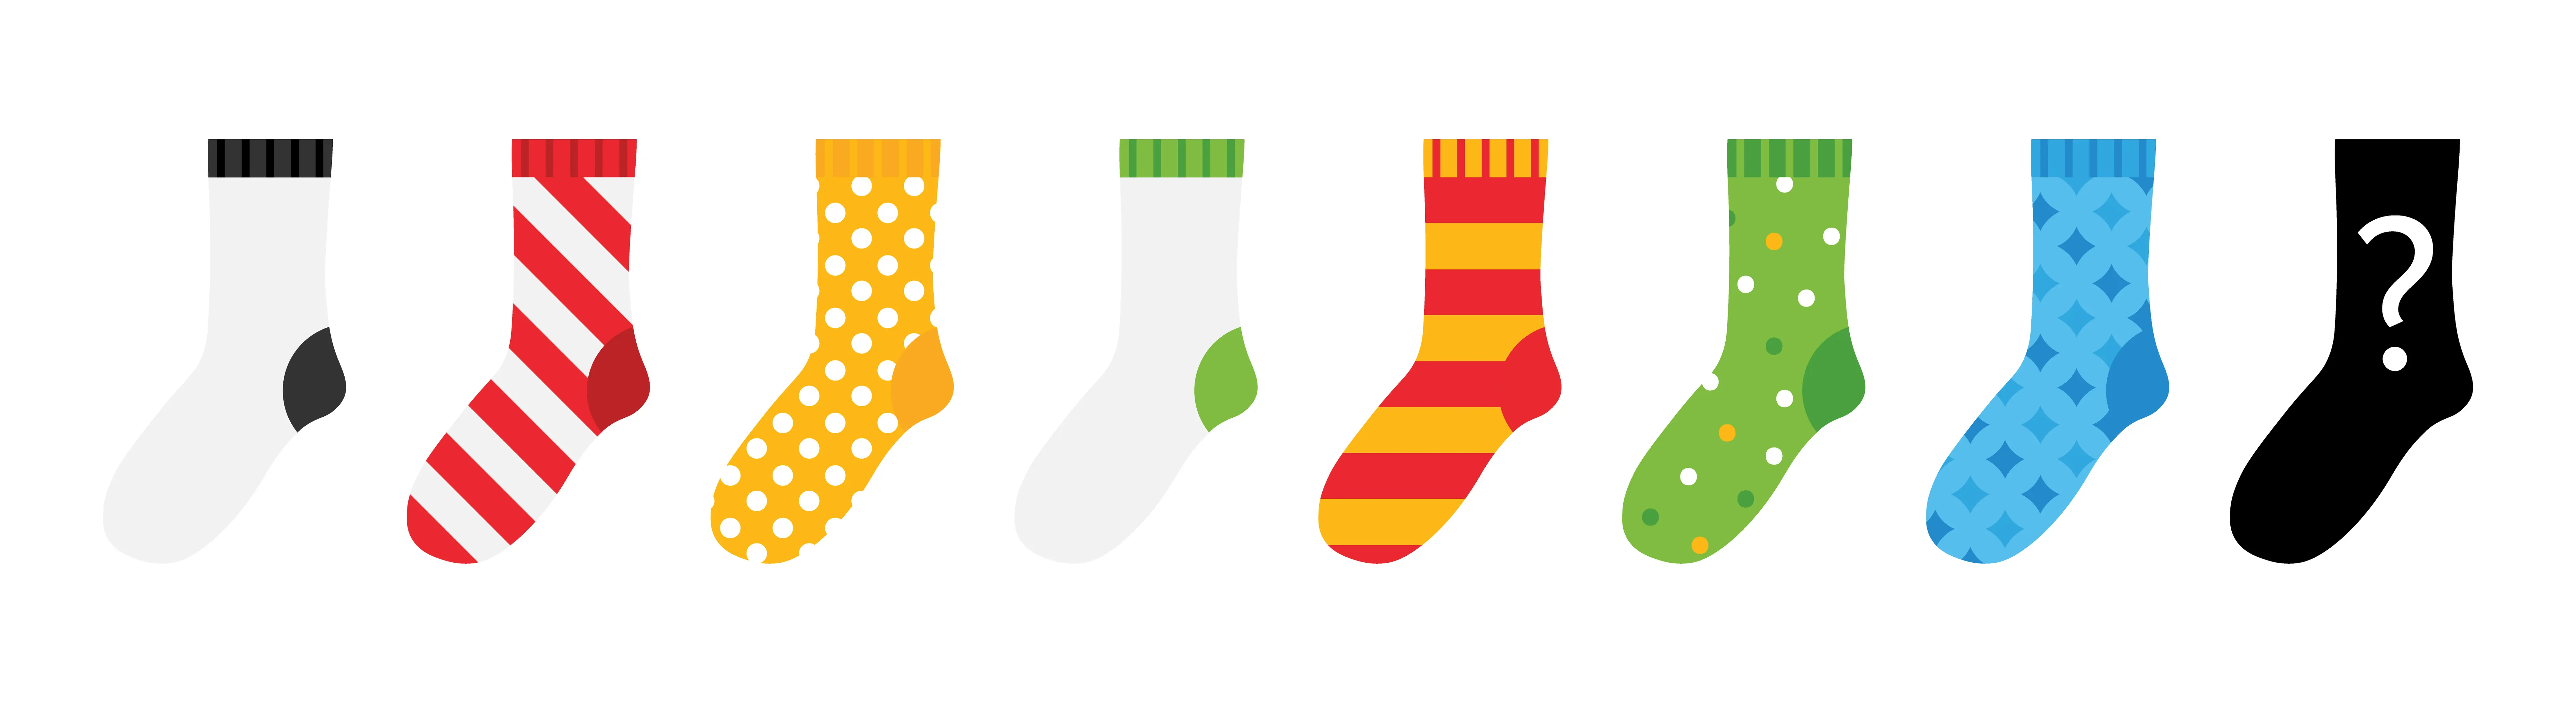 Illustration of different types of socks